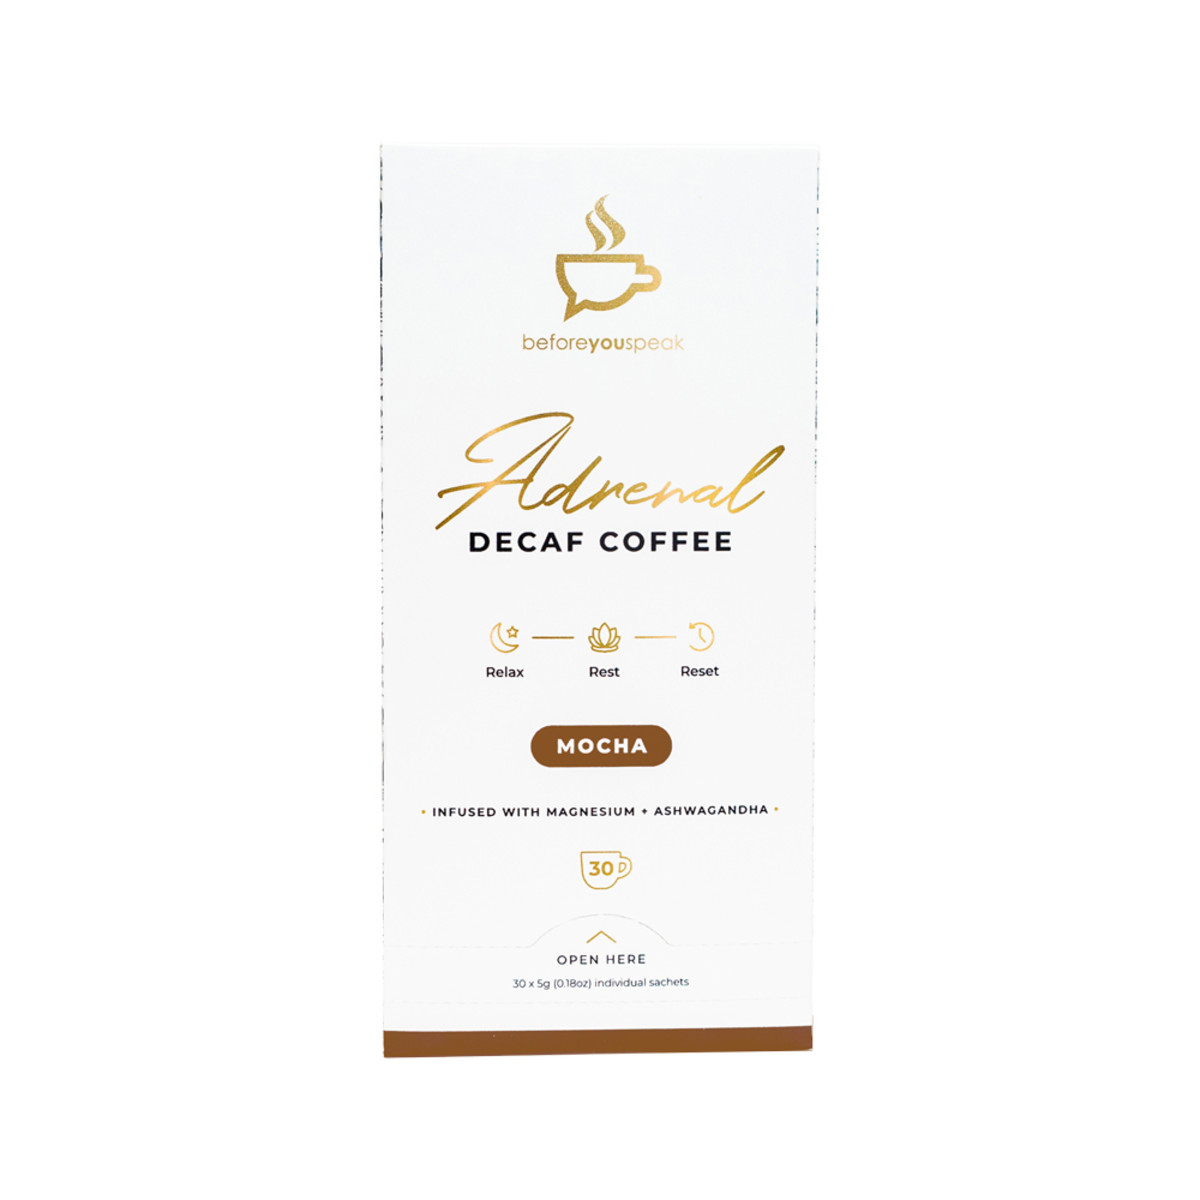 BEFORE YOU SPEAK - Adrenal Decaf Coffee Mocha 30 Pack